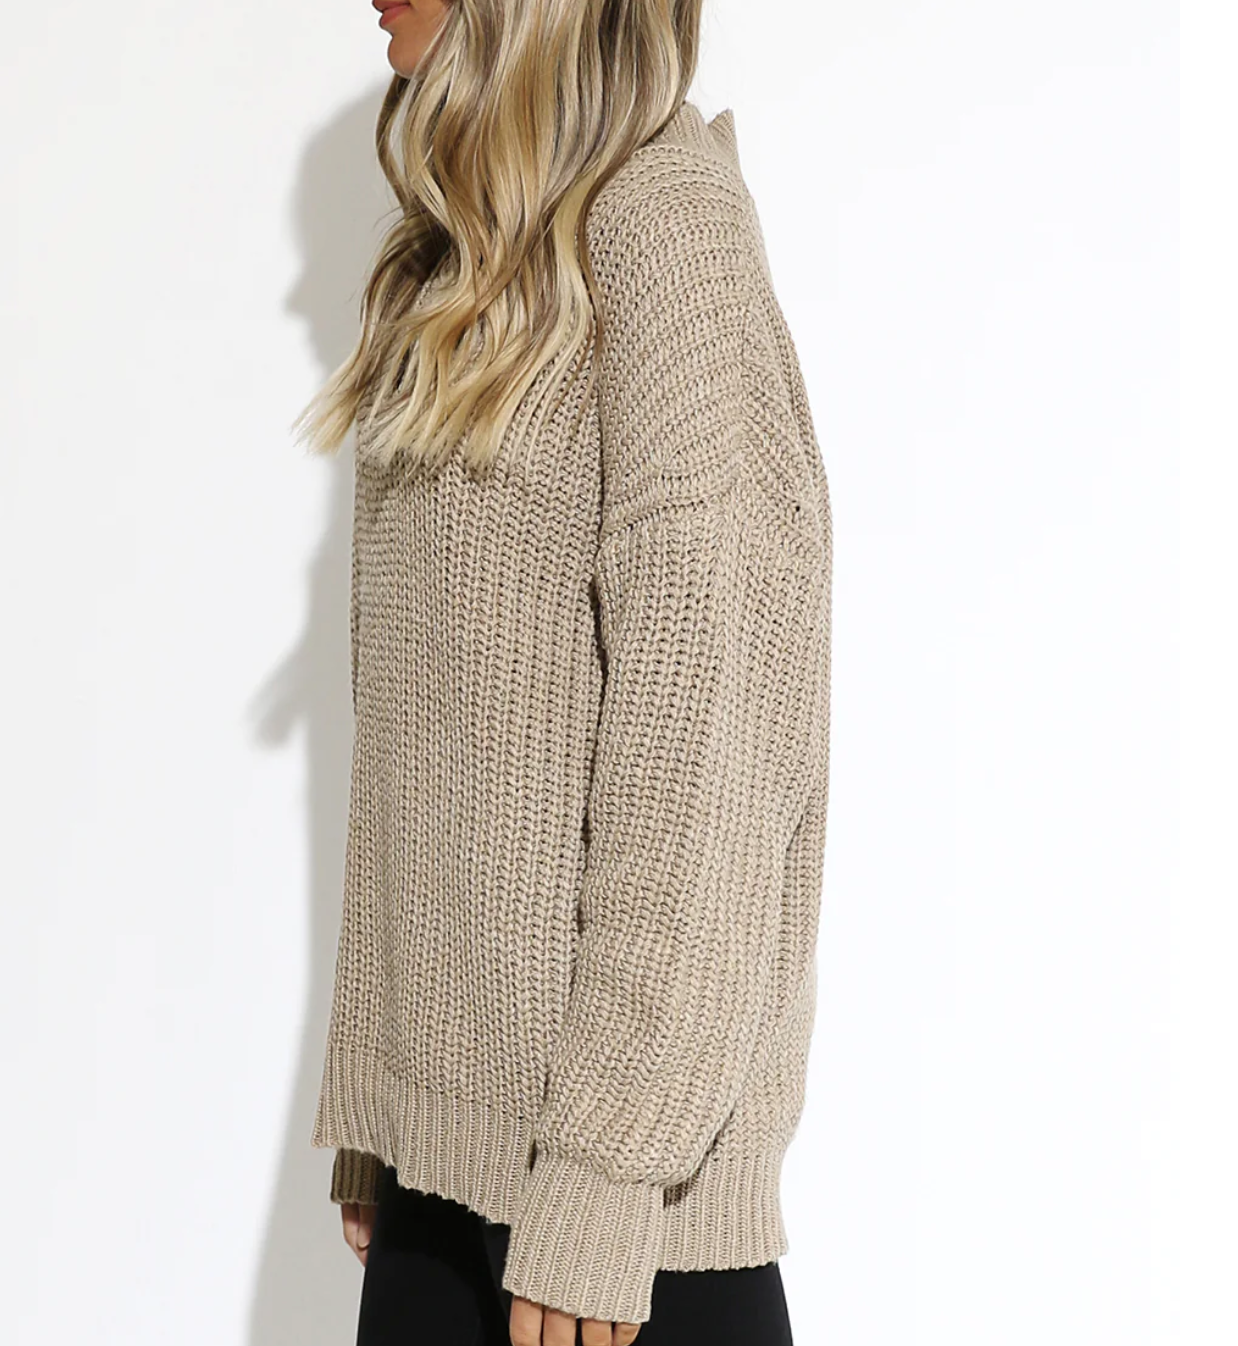 Kaia Knit Sweater